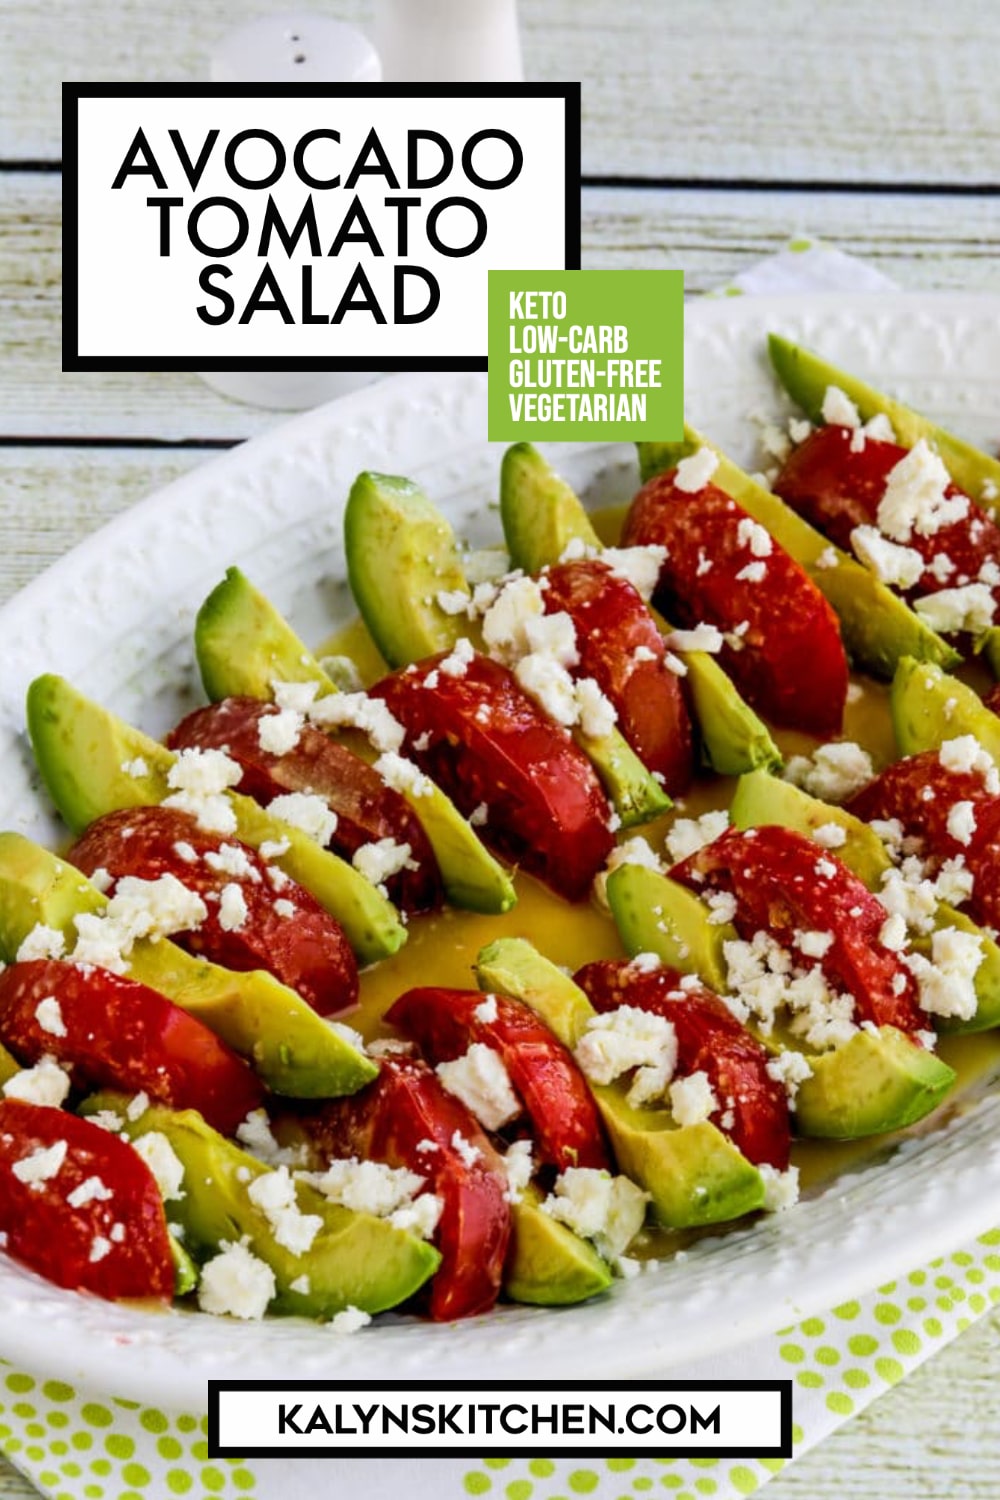 Pinterest image of Avocado Tomato Salad